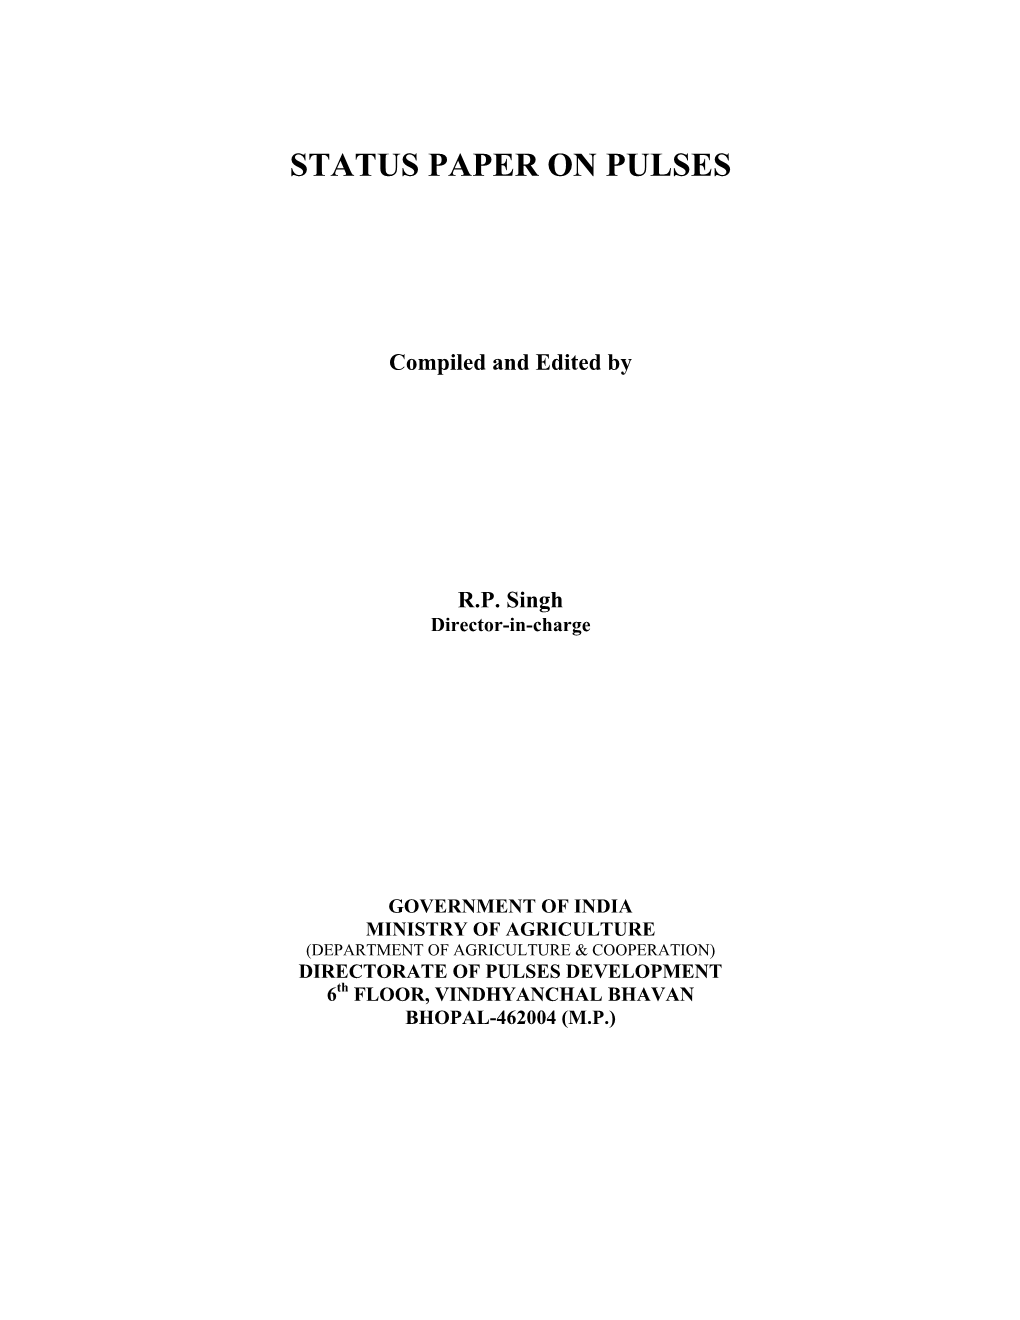 Status Paper on Pulses